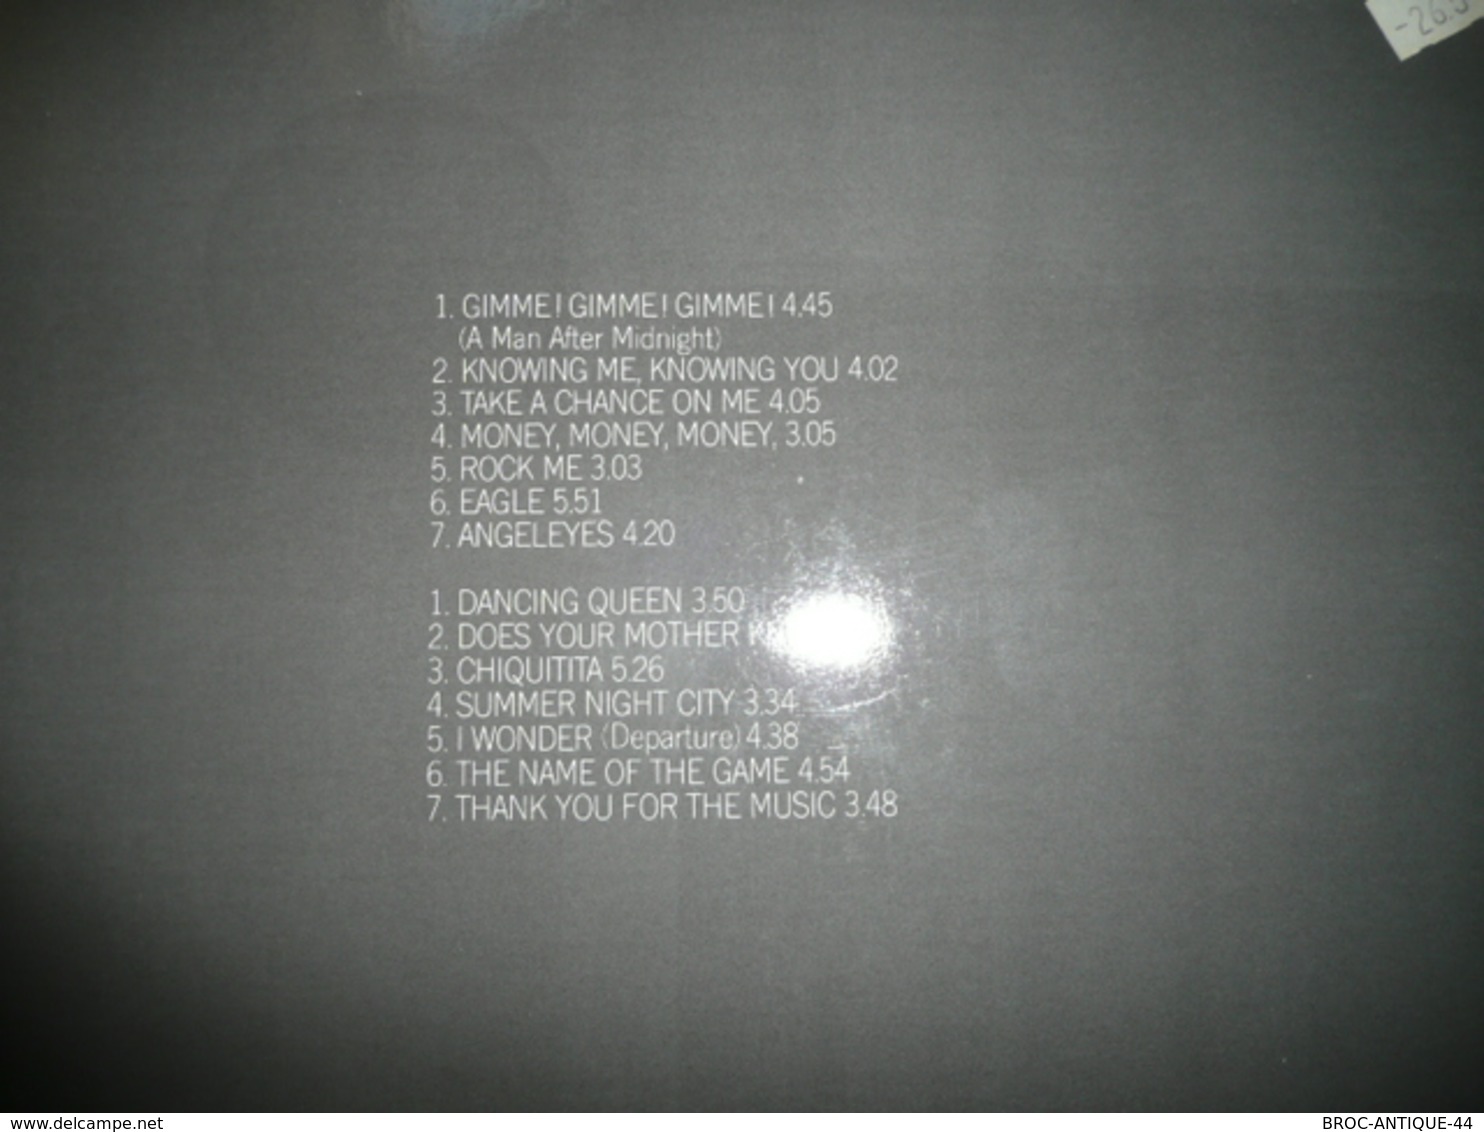 LP33 N°131 - ABBA - GREATEST HITS VOL.2 -  COMPILATION 14 TITRES - Disco, Pop